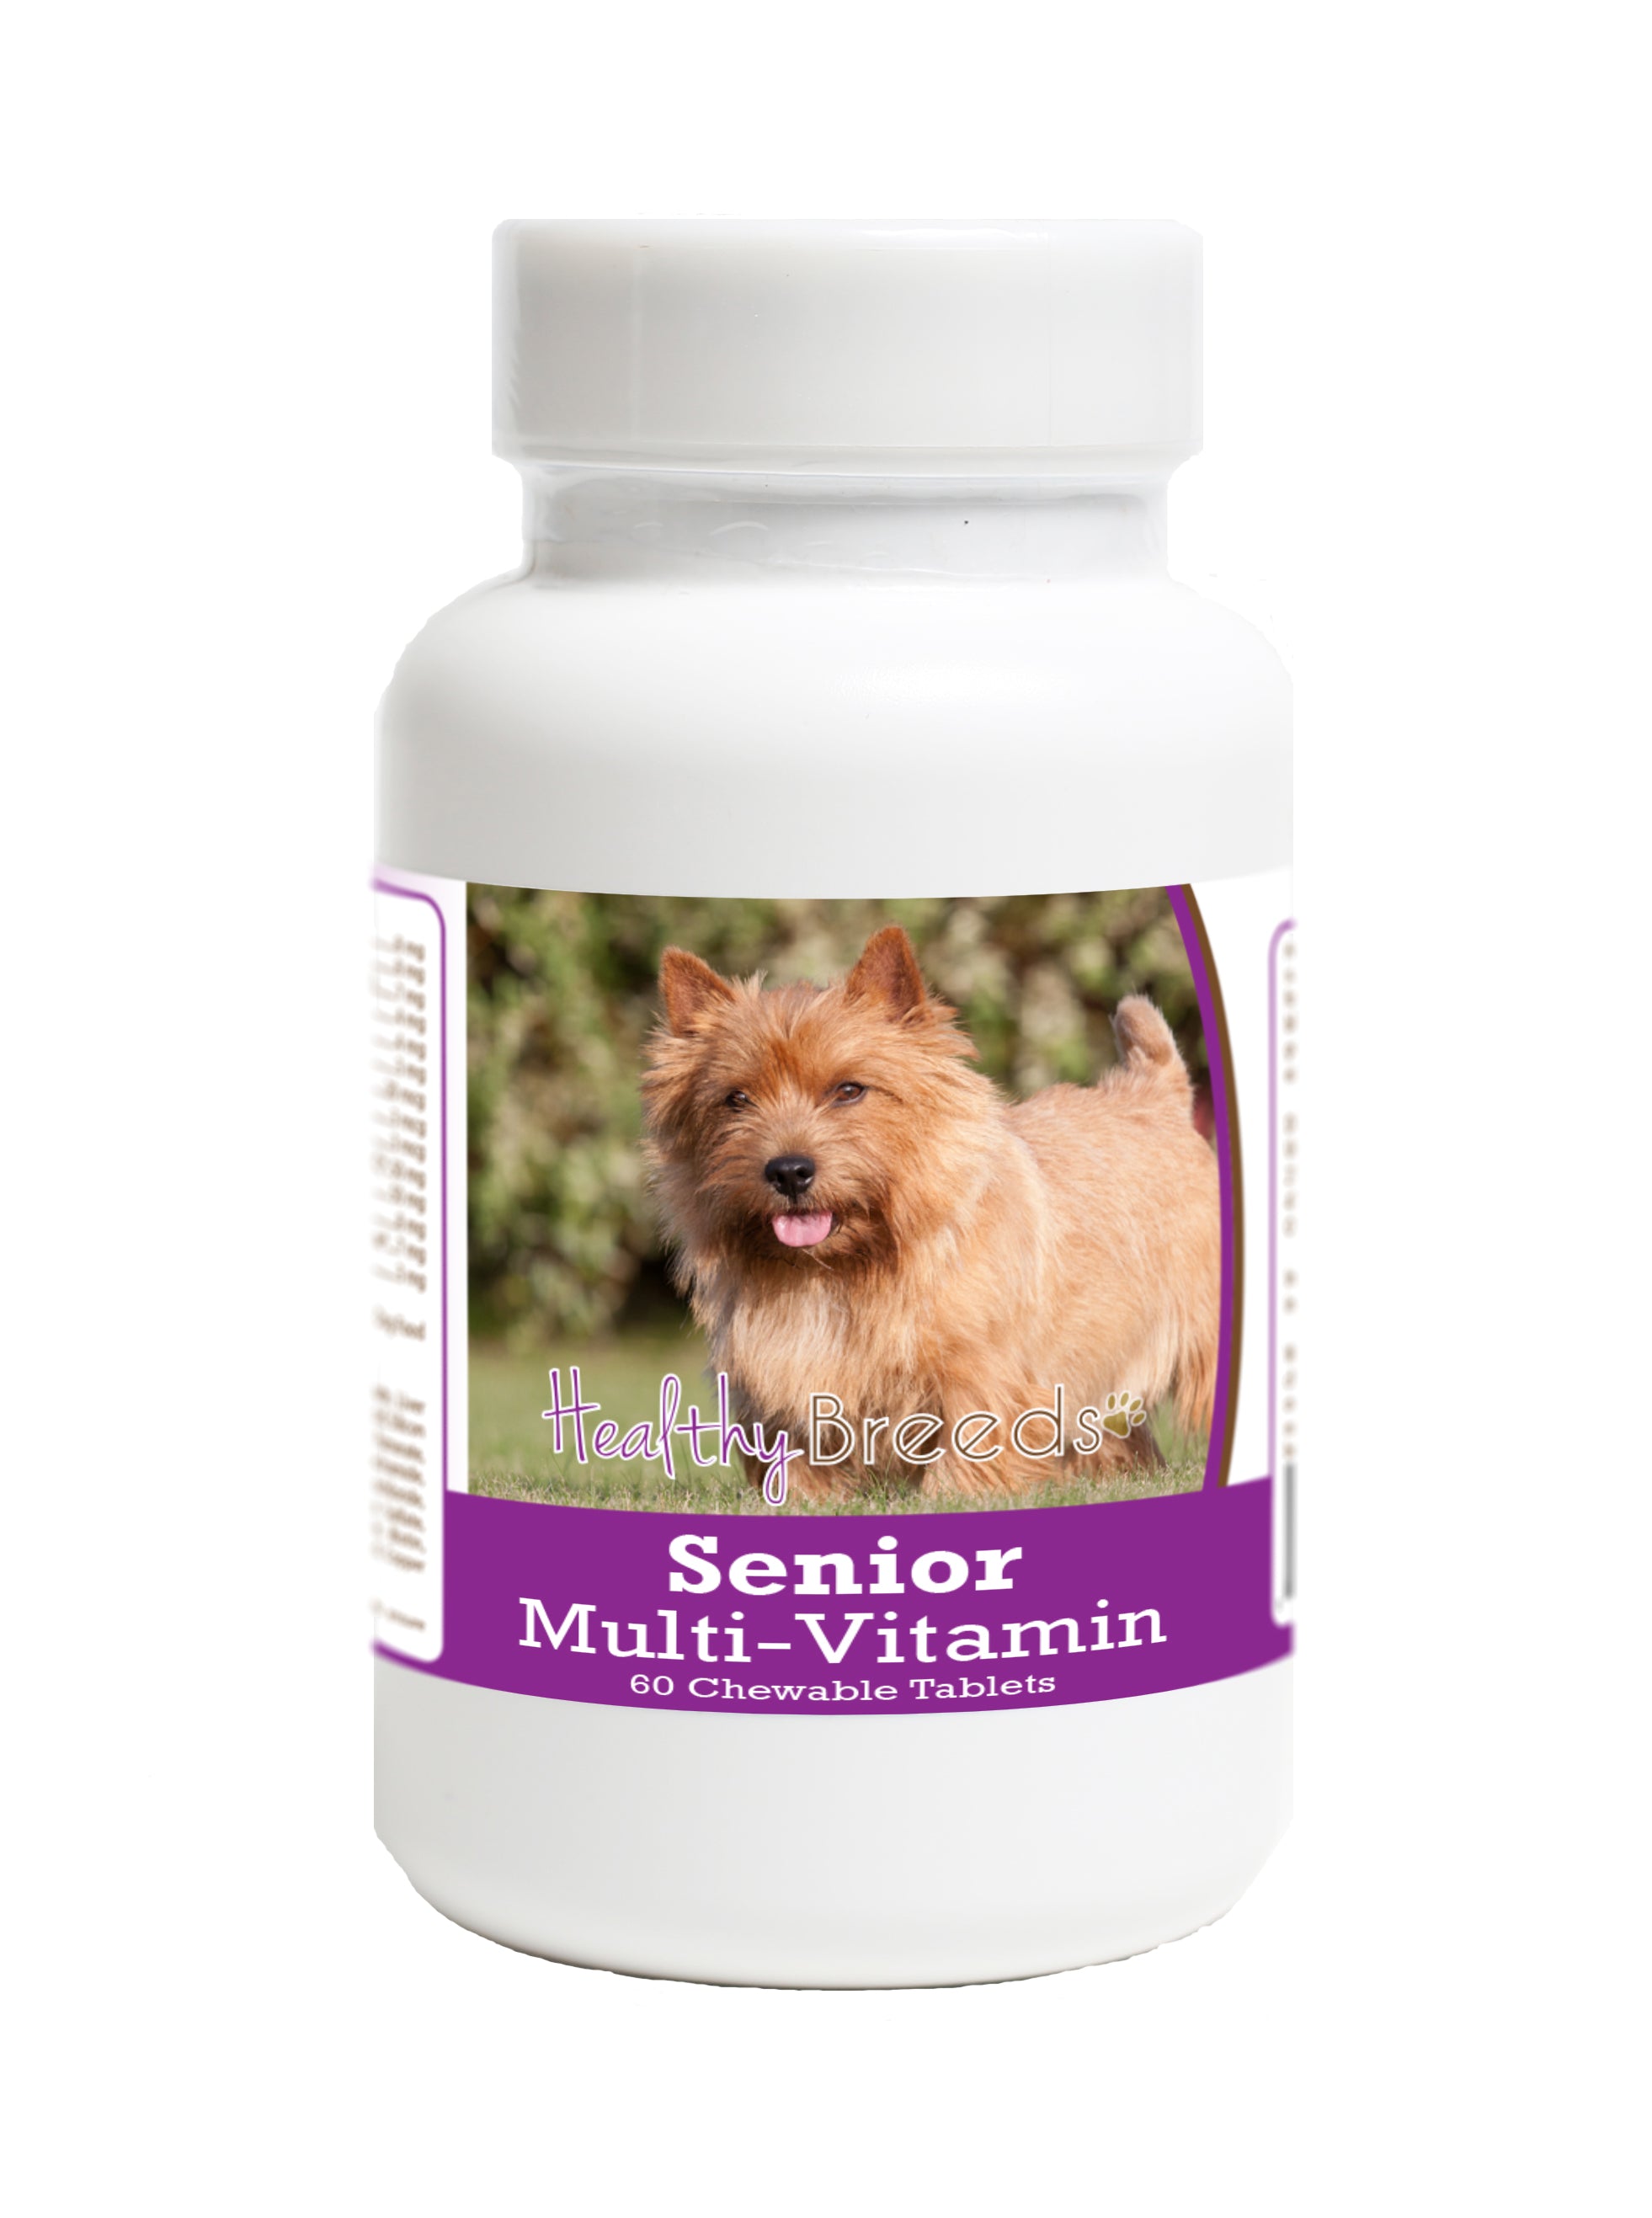 Norwich Terrier Senior Dog Multivitamin Tablets 60 Count